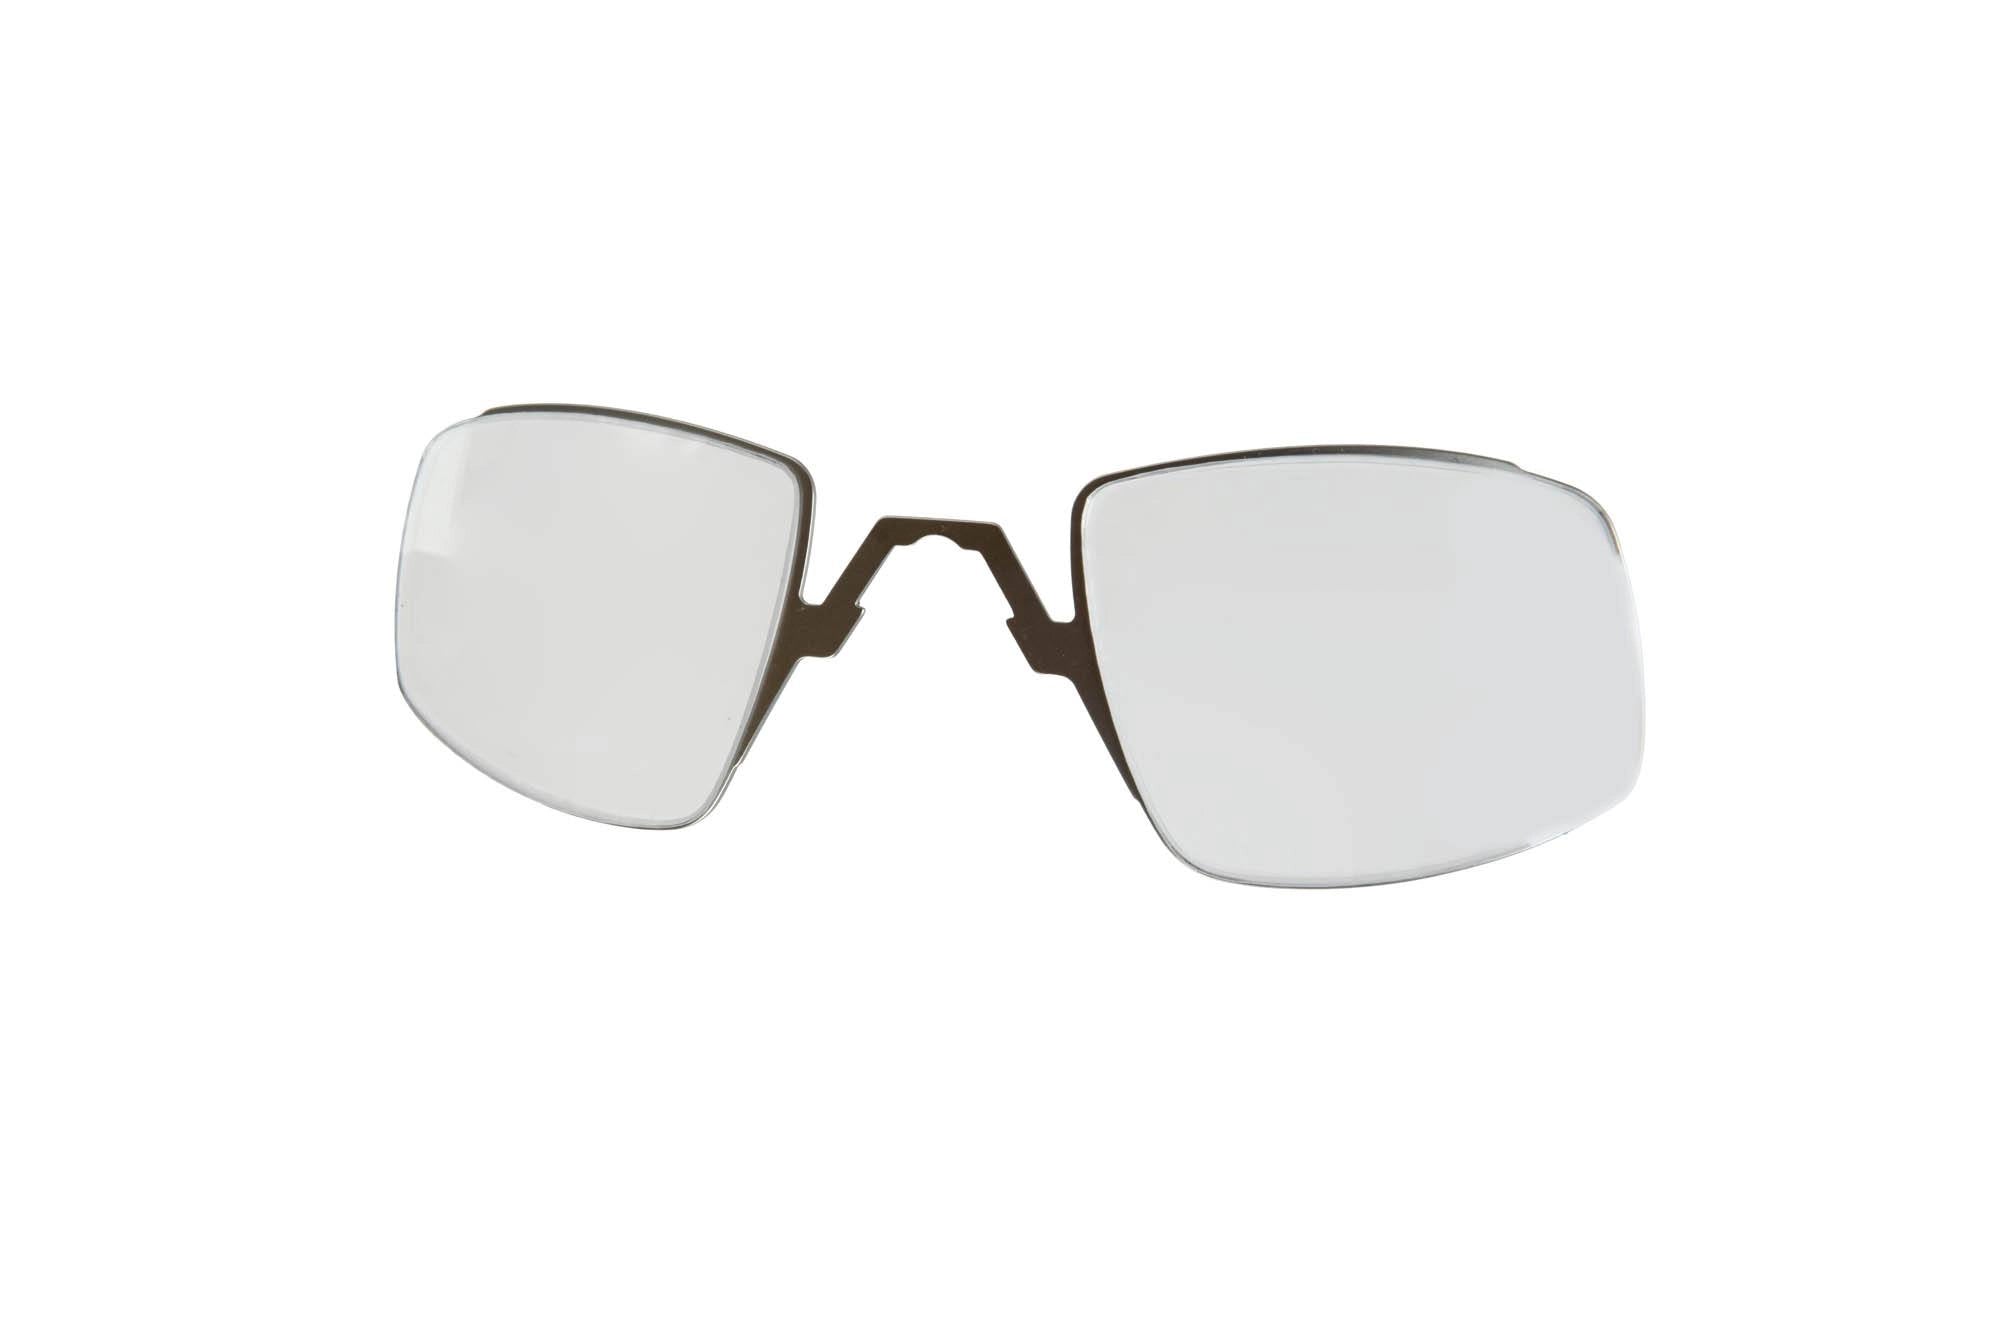 Corrective glasses insole - COMBAT / X810